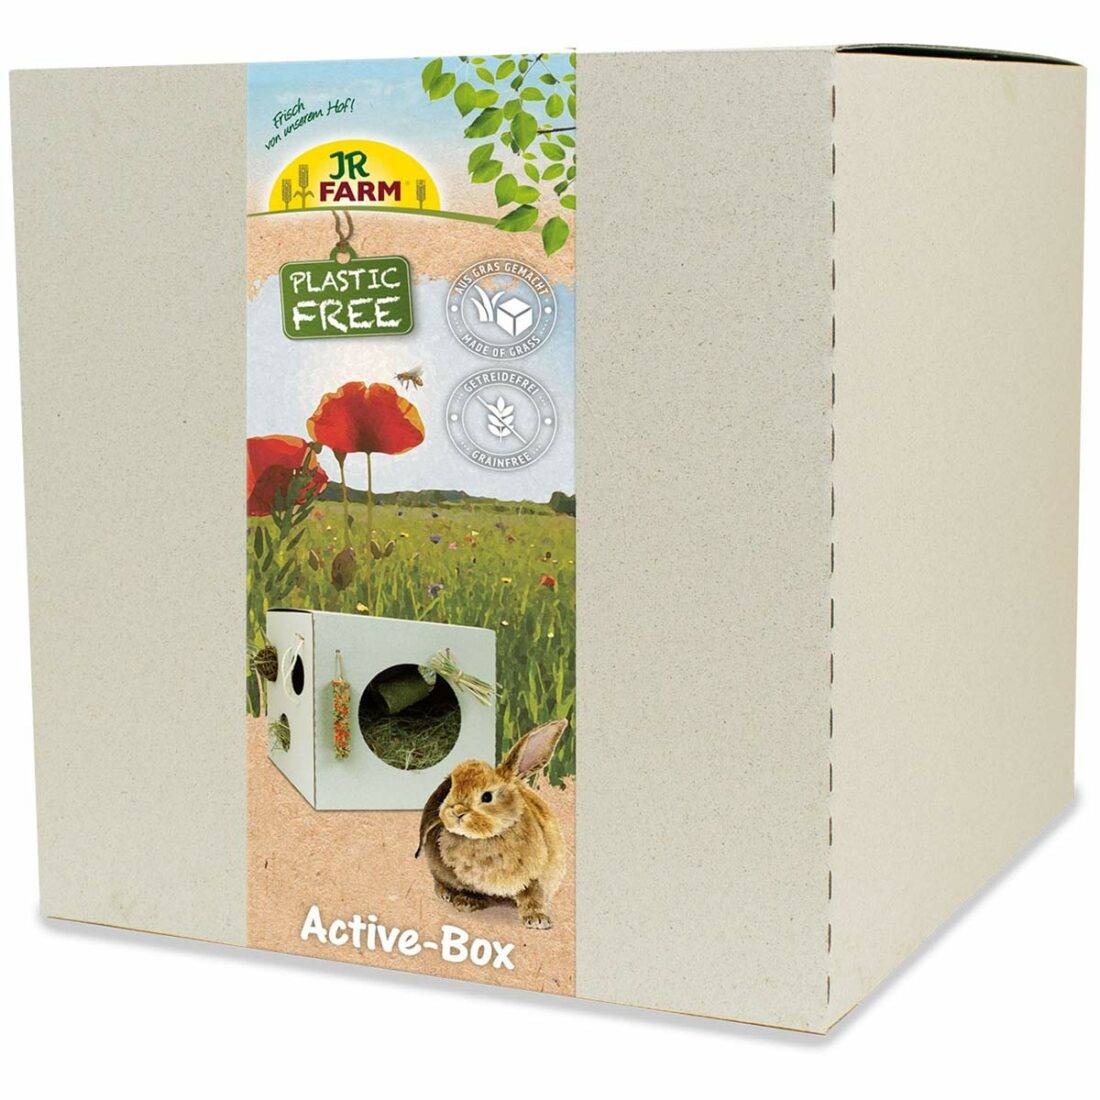 JR Farm PlasticFree aktivní box